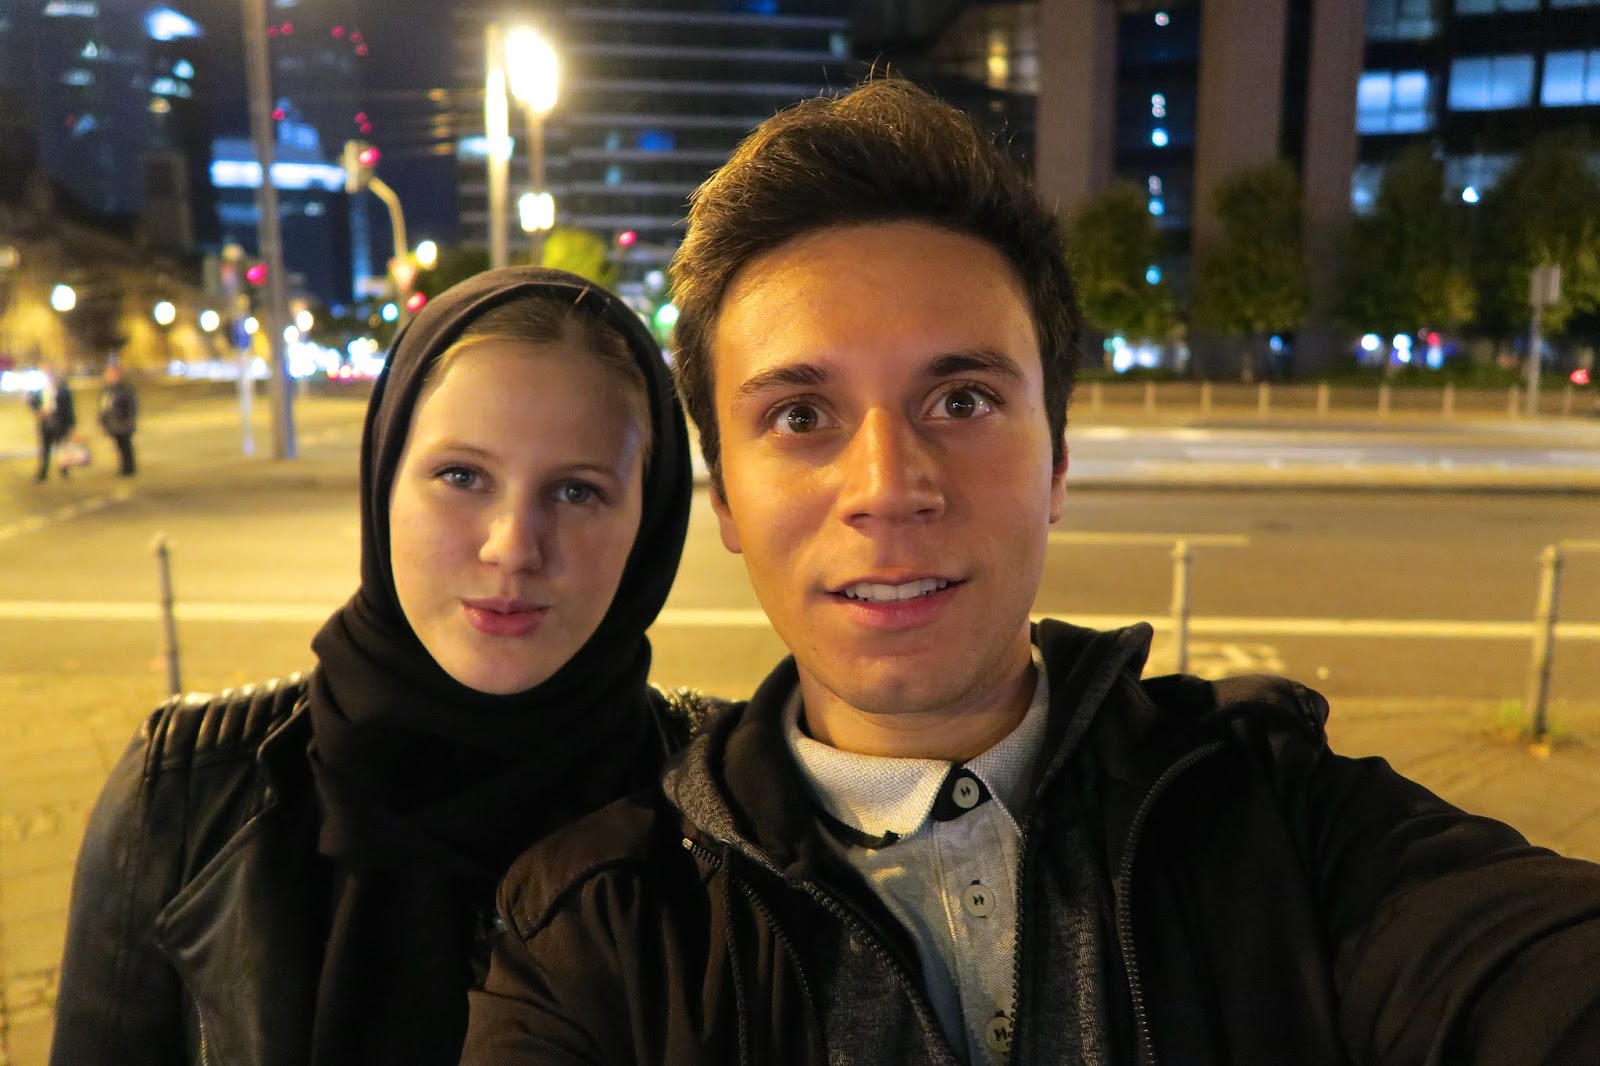 muslim couple